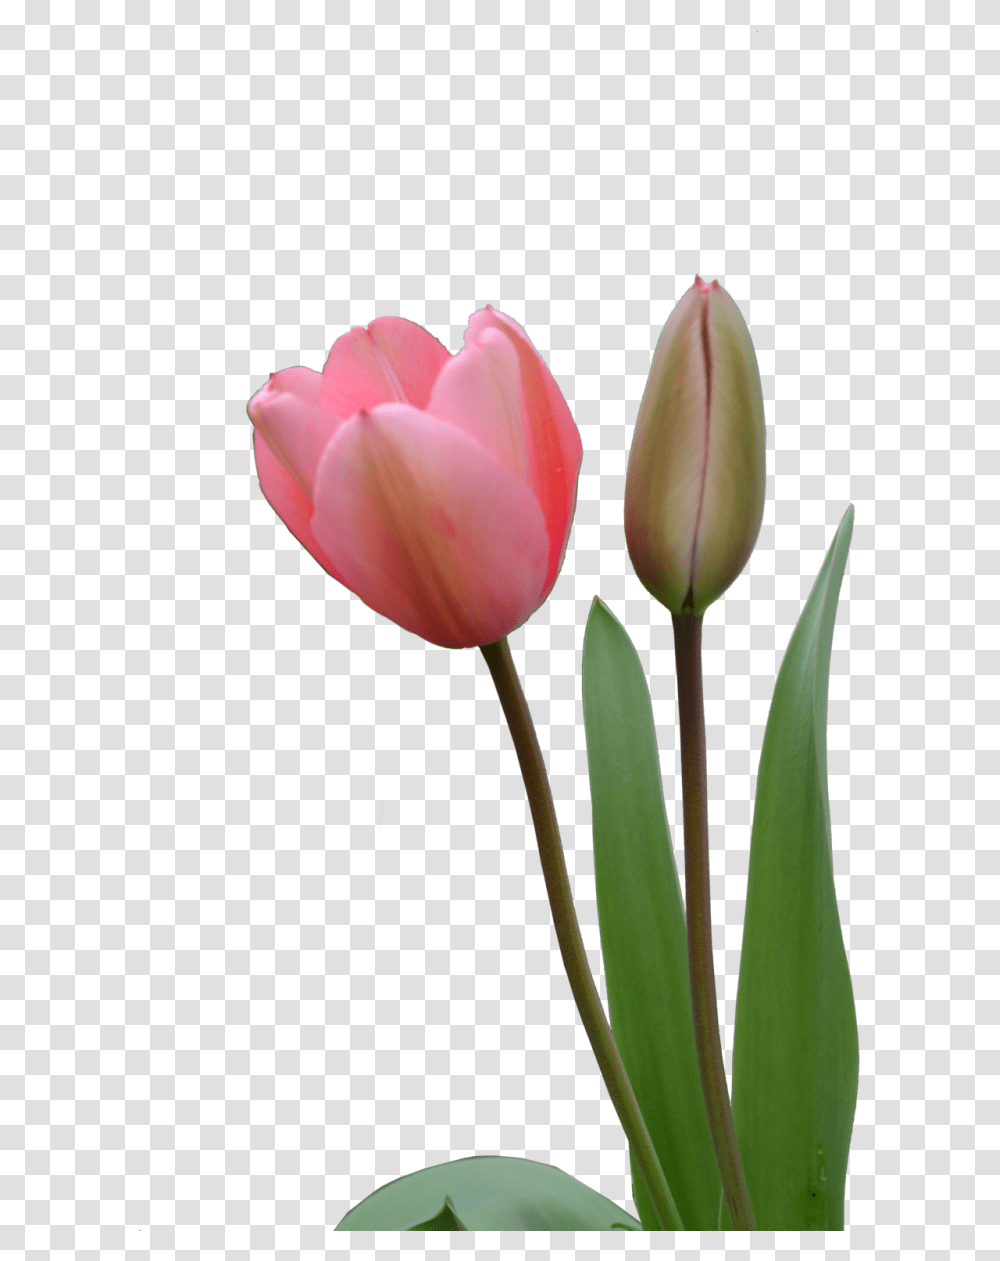 Tulip Image Purepng Free Cc0 Image Flower Bud Hd, Plant, Blossom Transparent Png